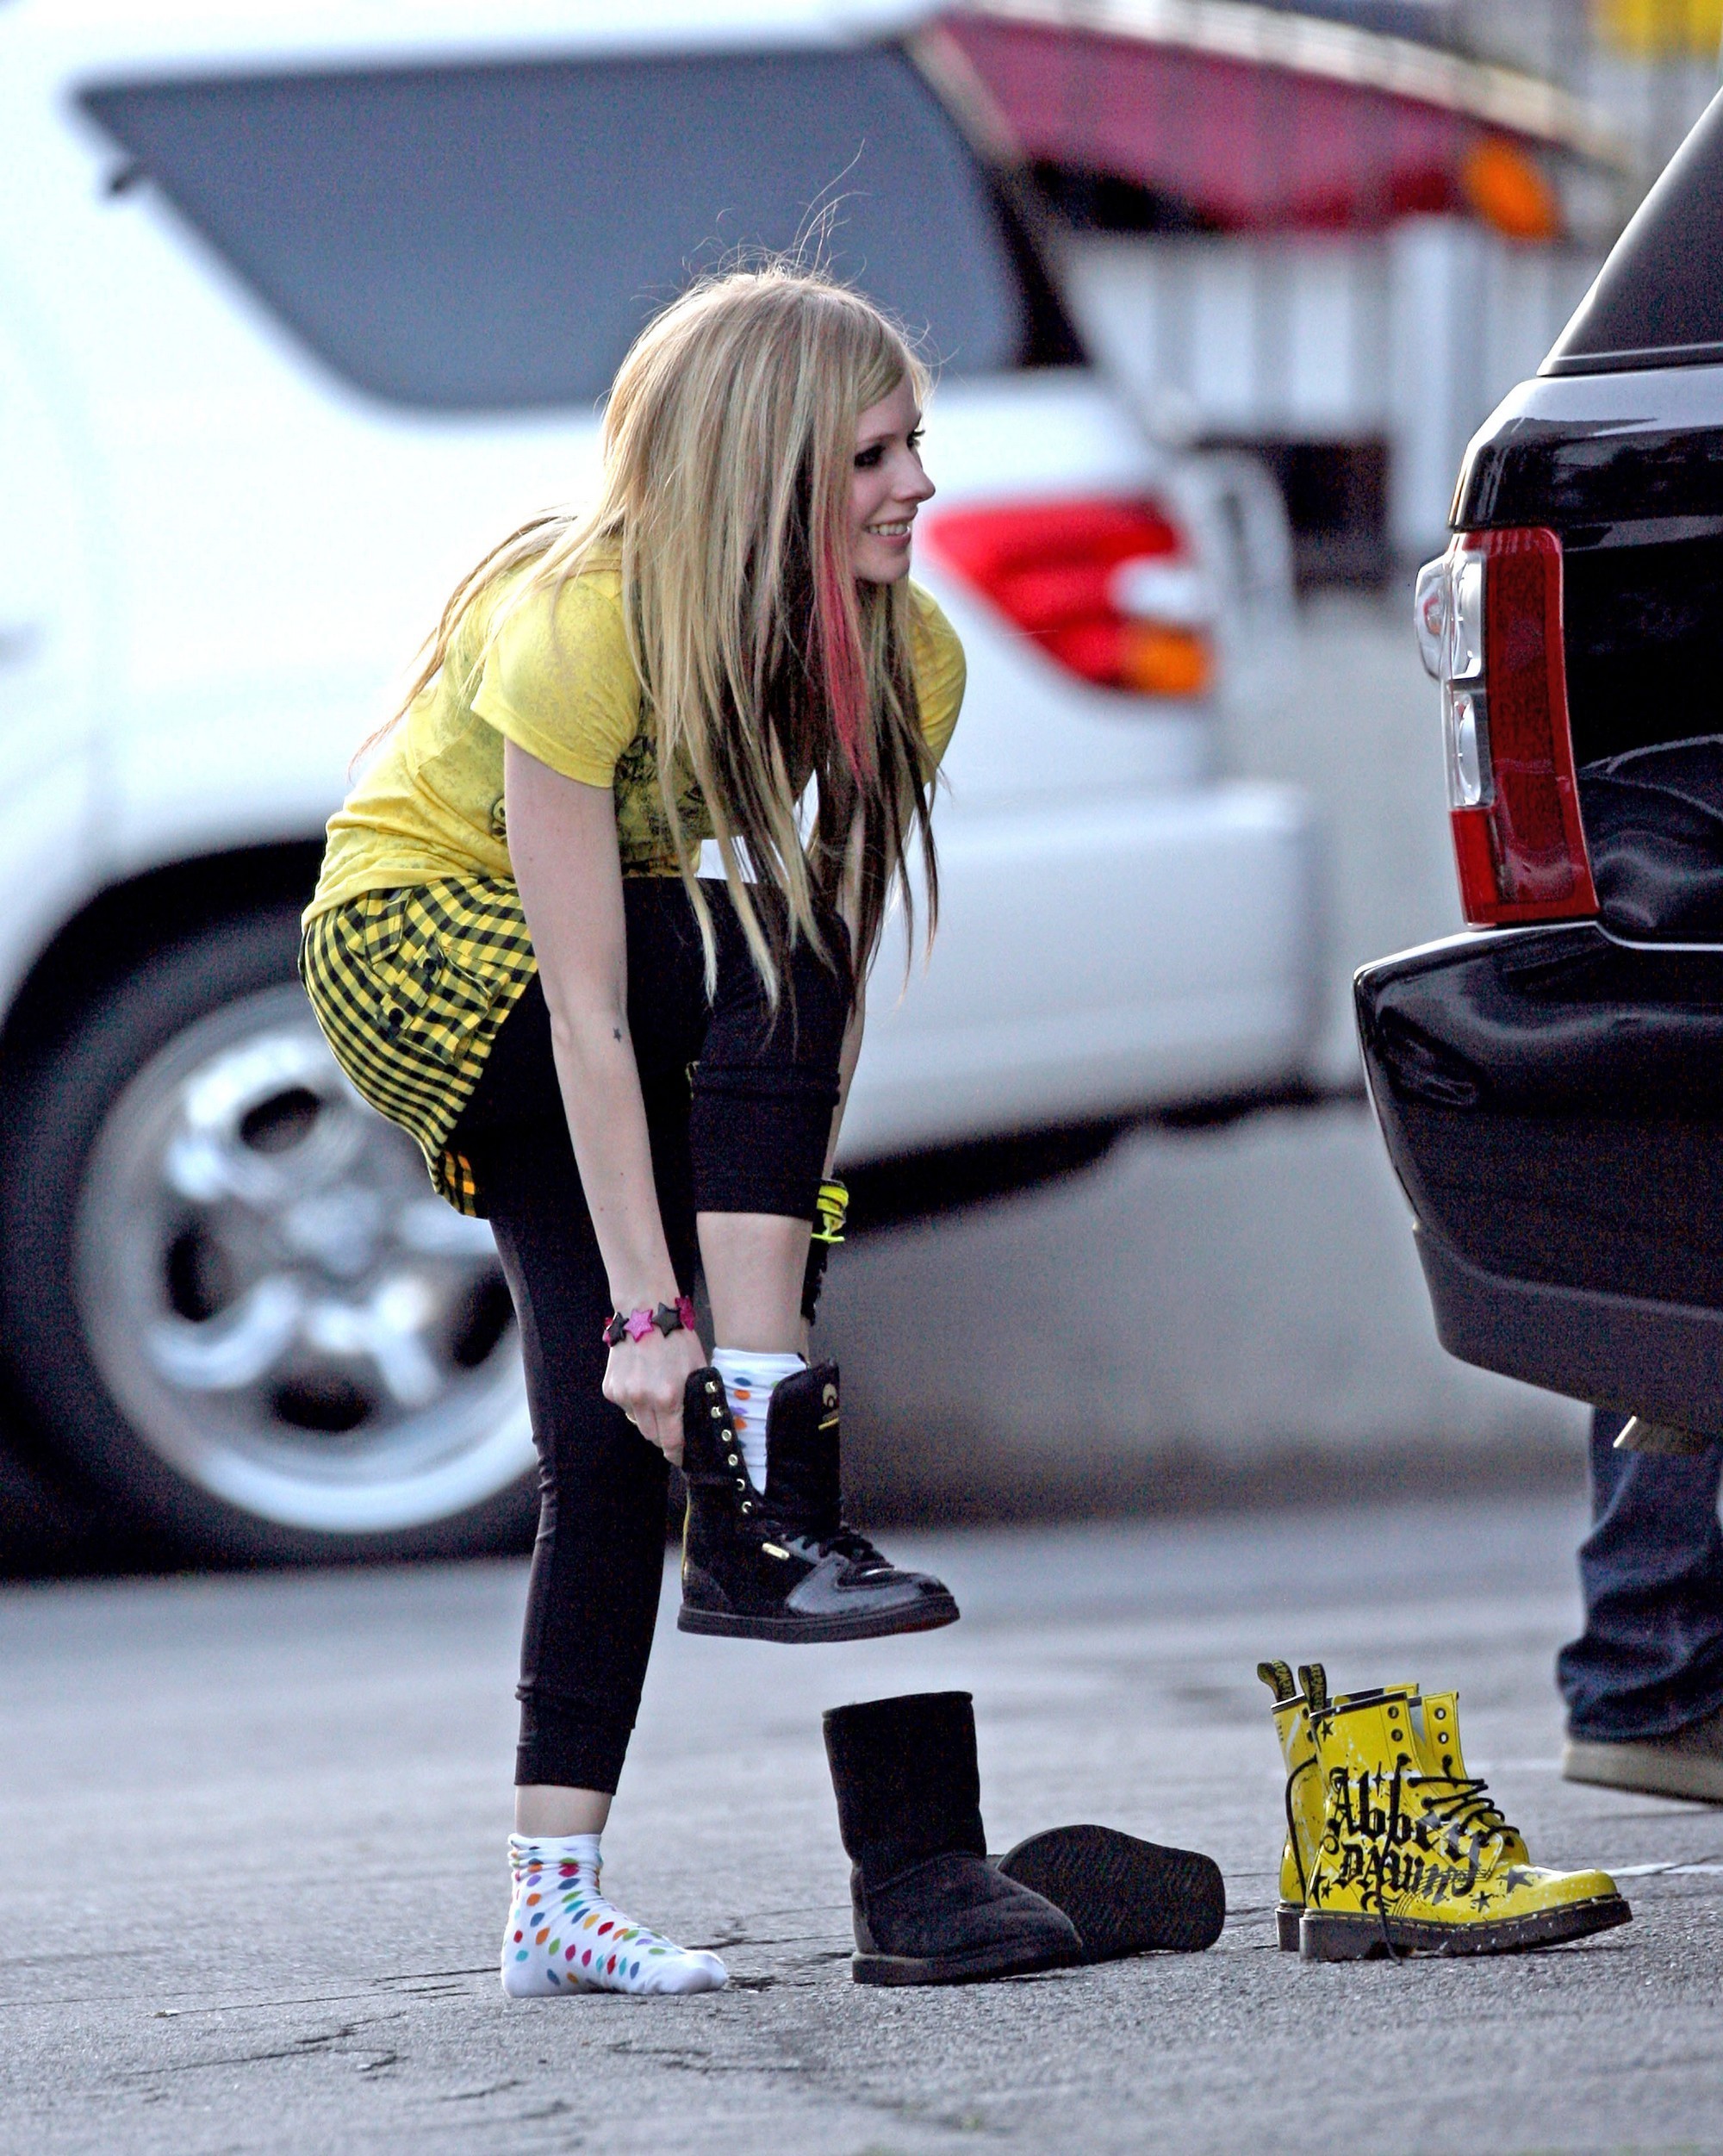 Avril Lavigne Images on Fanpop.